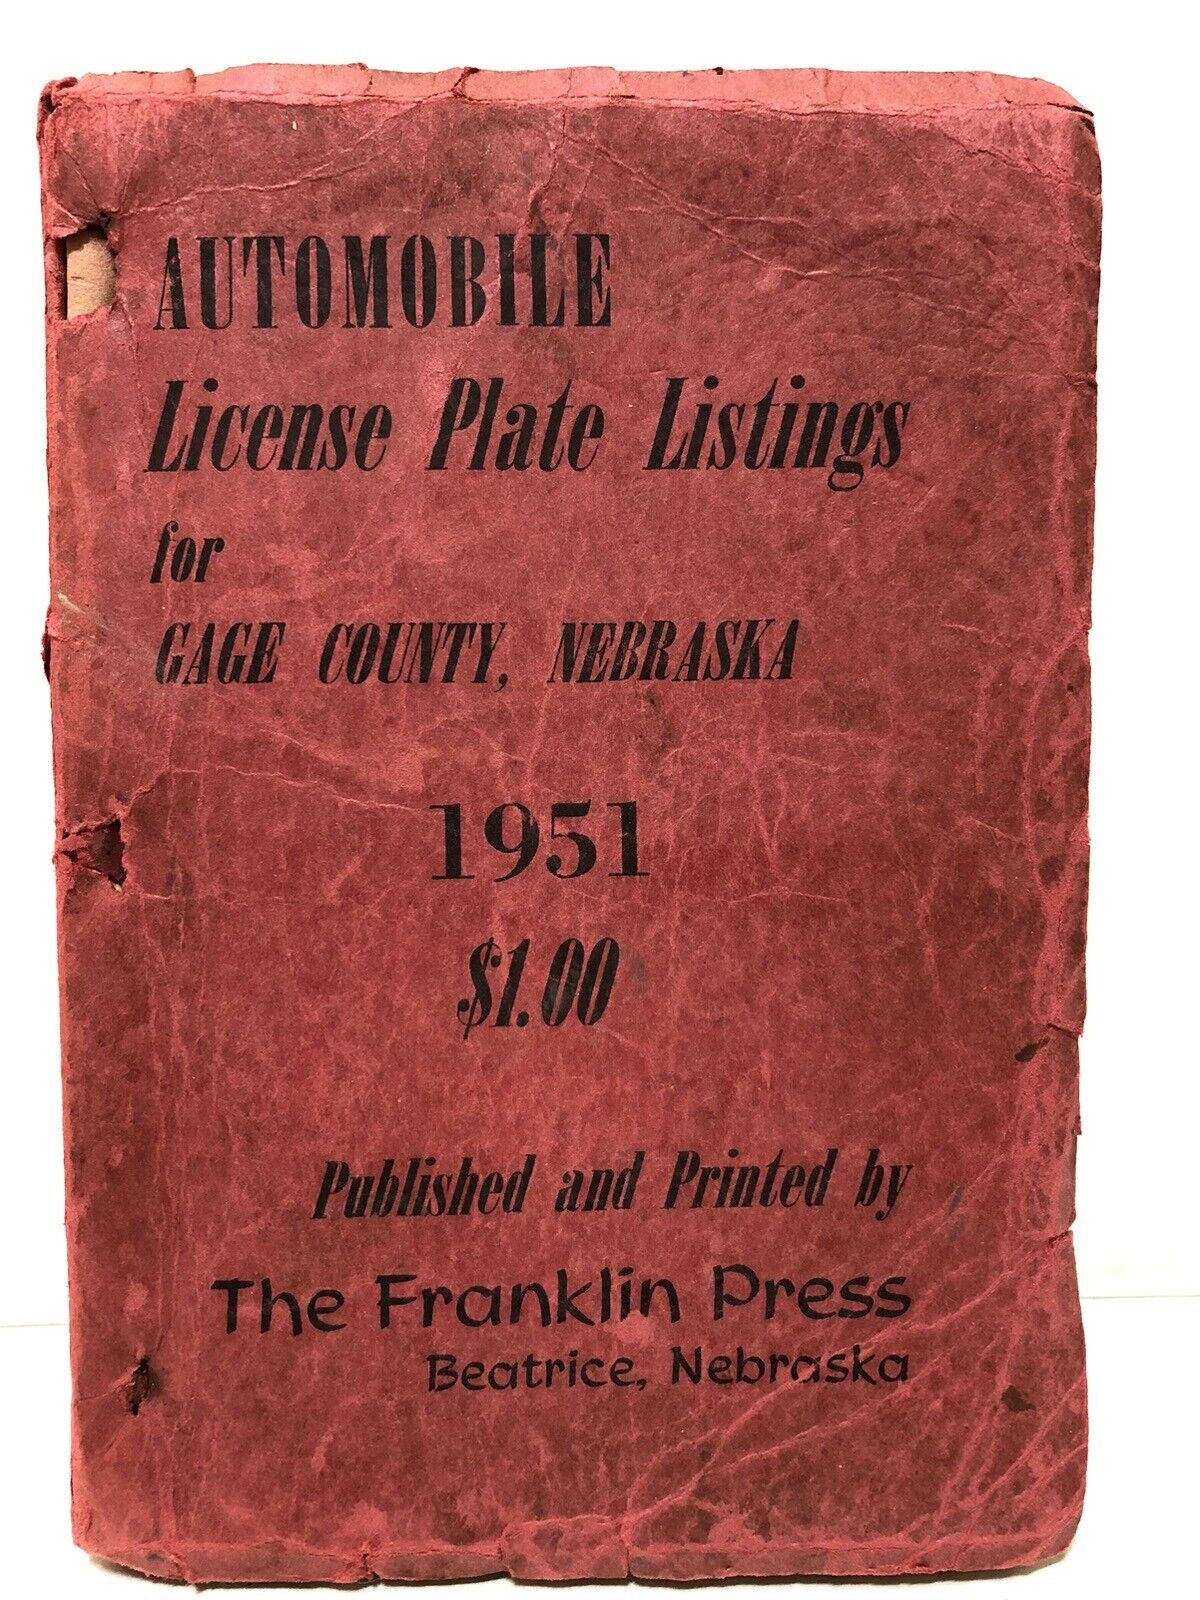 Rare 1951 Gage County BEATRICE Nebraska License Plate Listings Address Directory